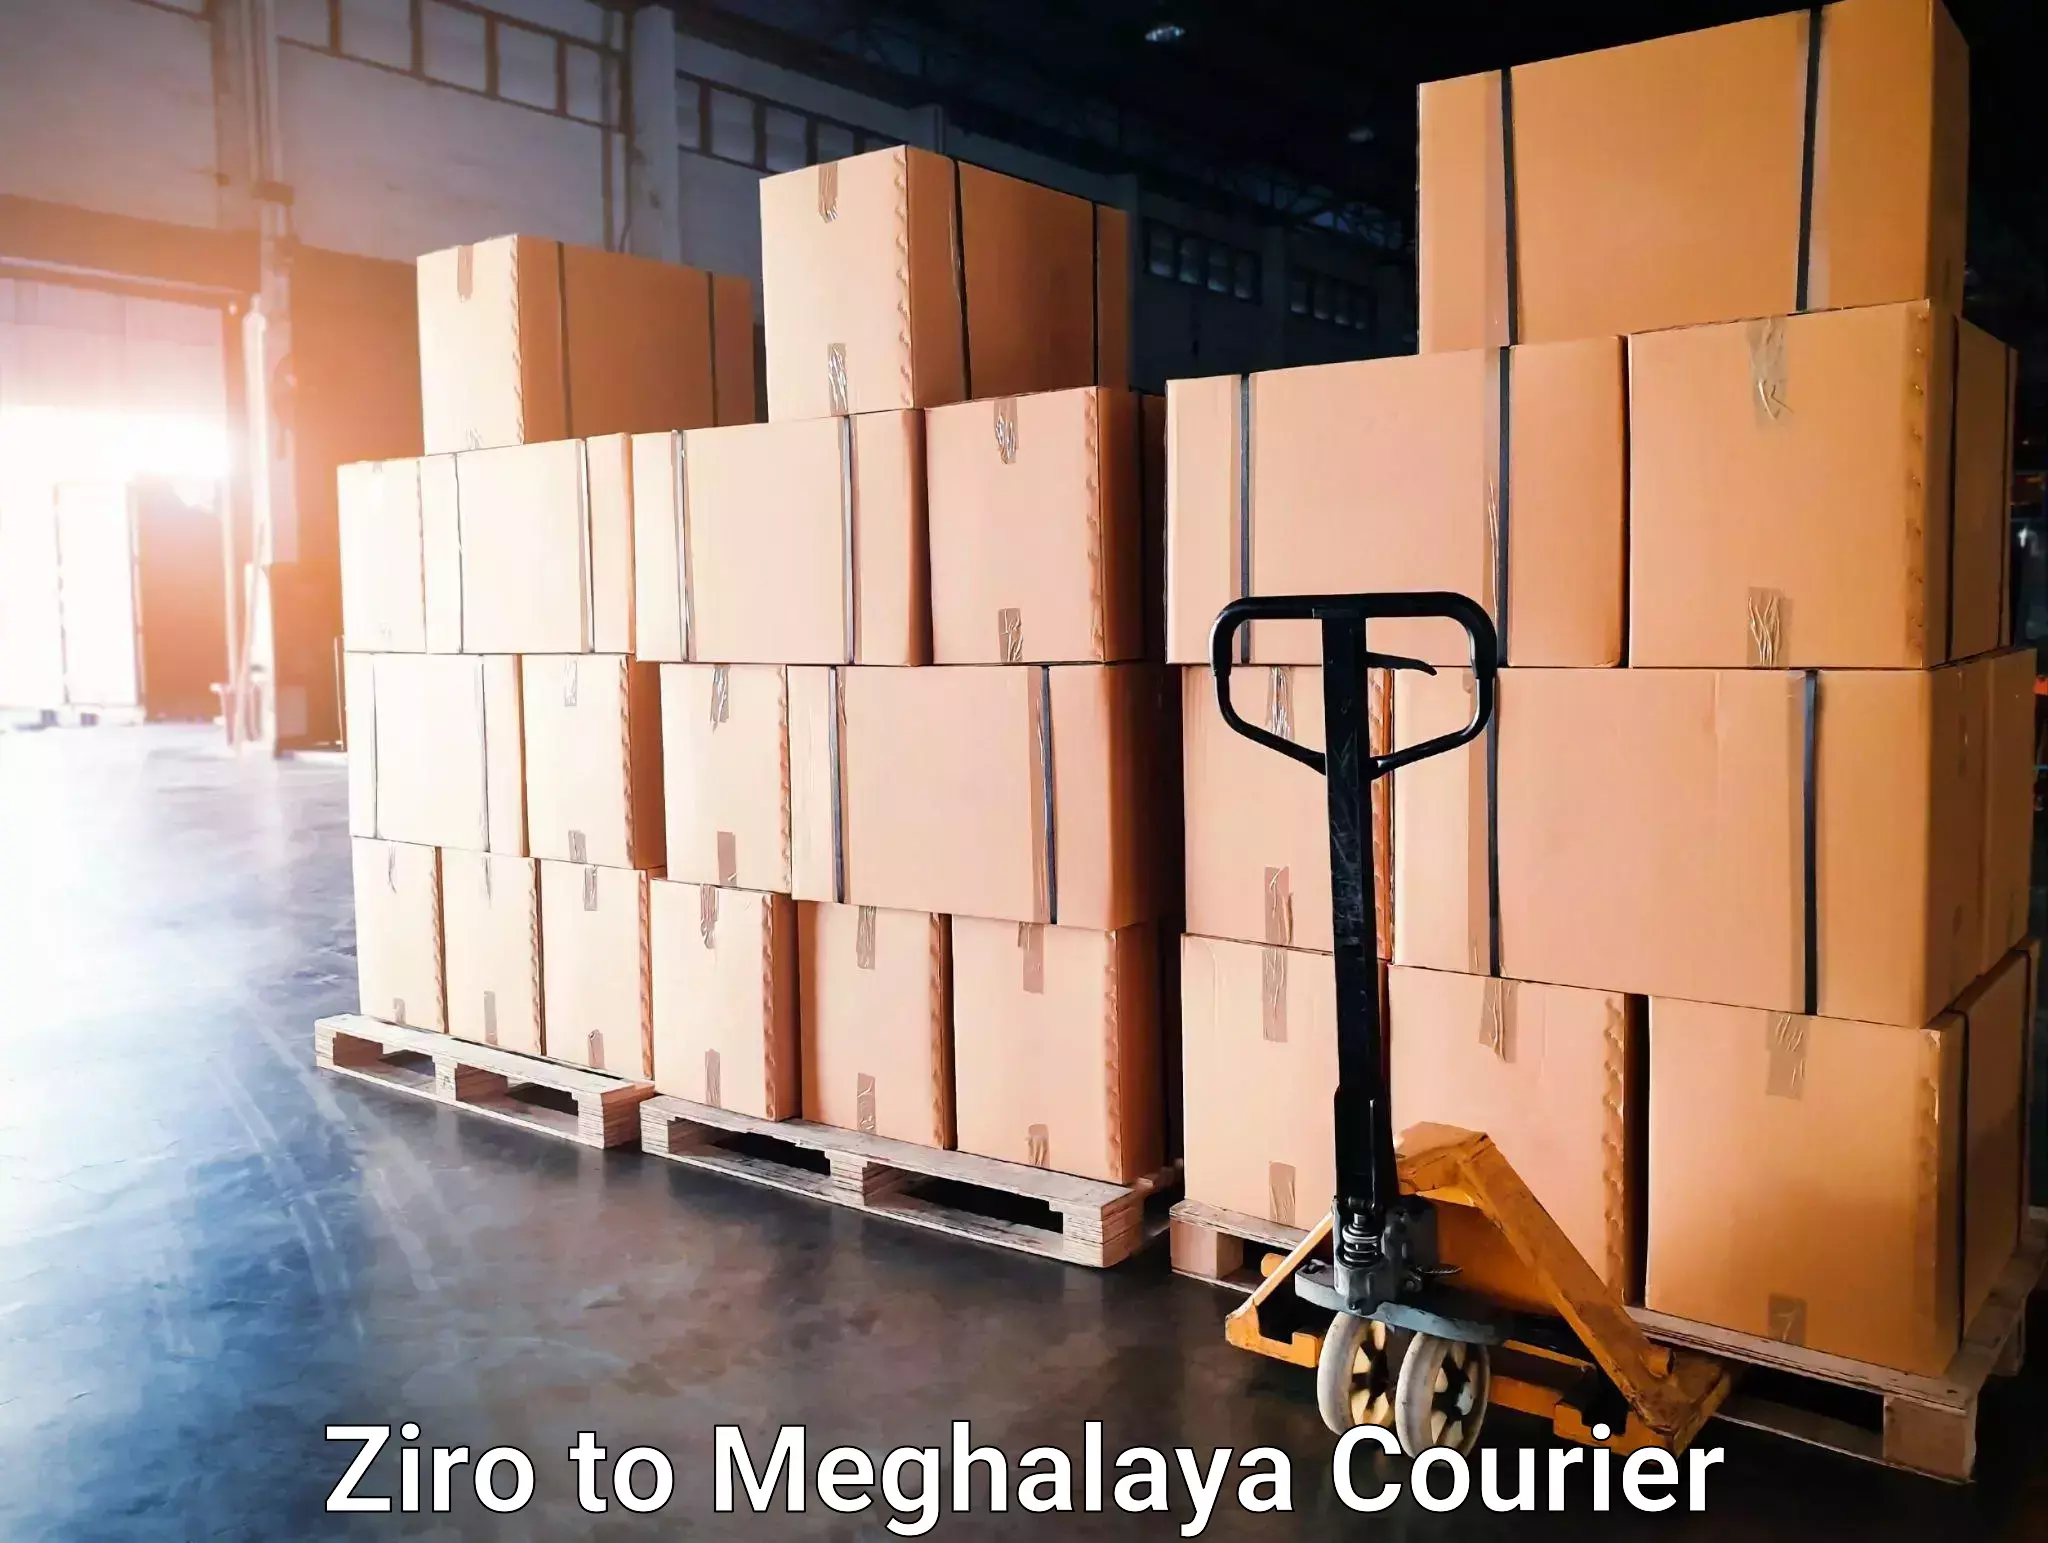 State-of-the-art courier technology Ziro to Meghalaya